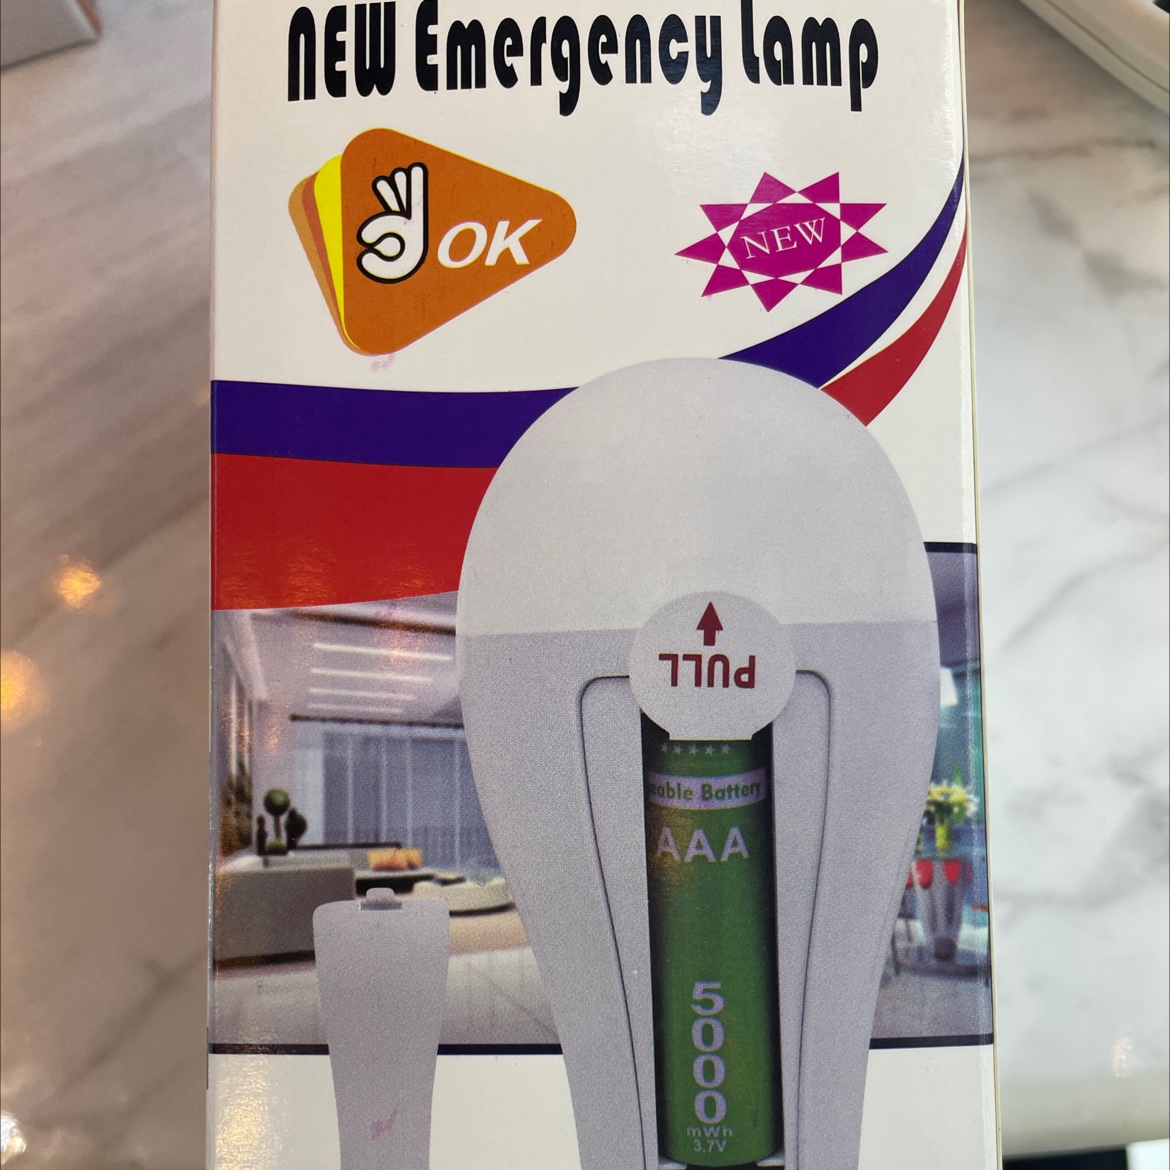 New emergency lamp
 